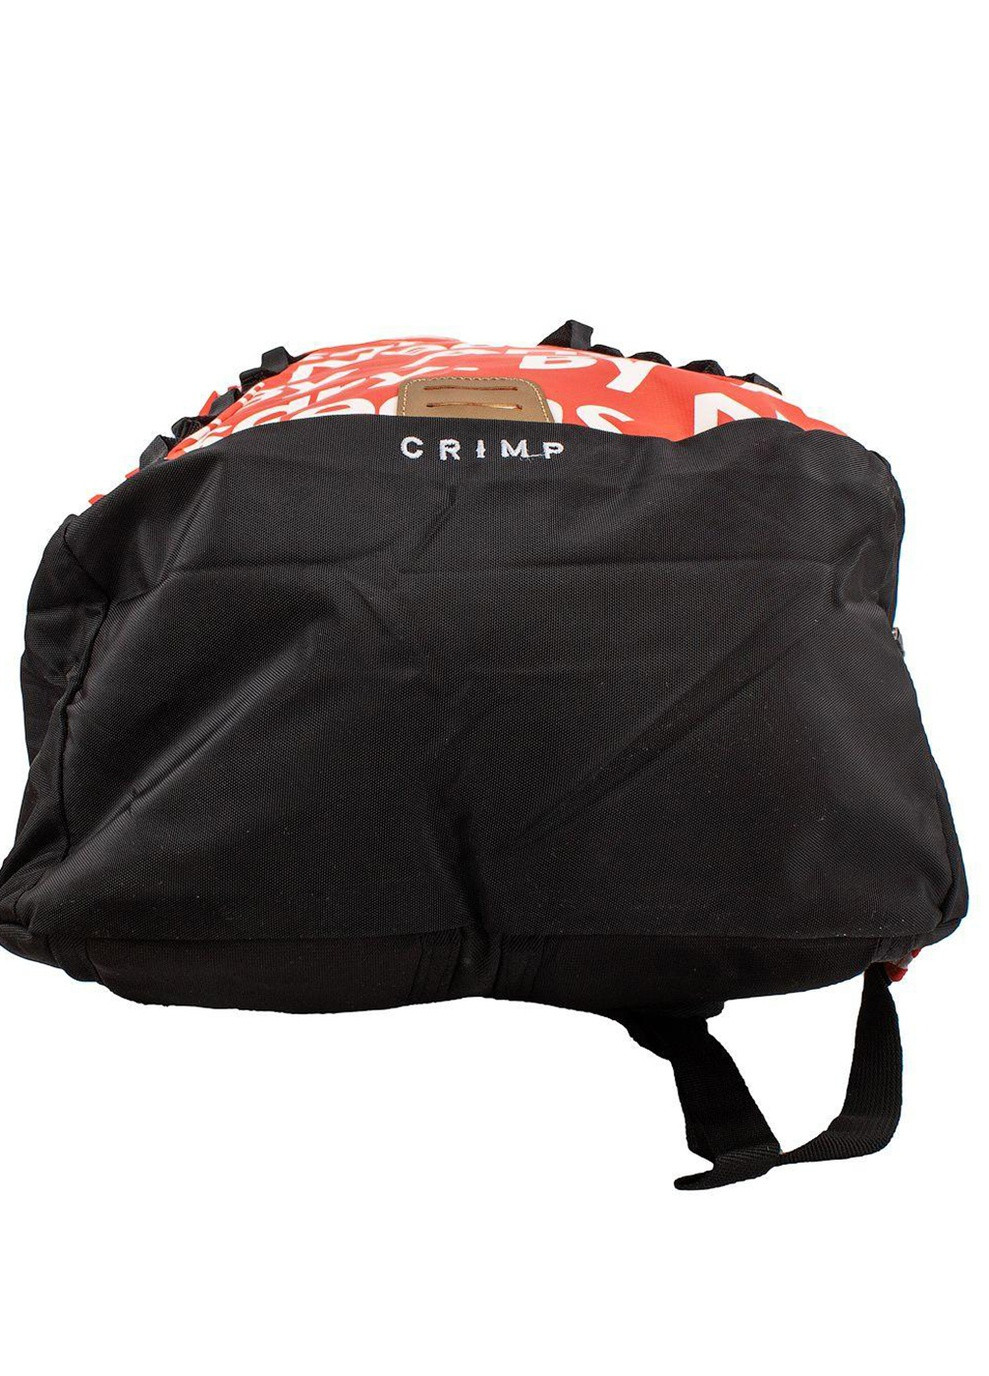 Женский рюкзак 32х48х16 см Valiria Fashion (250097055)